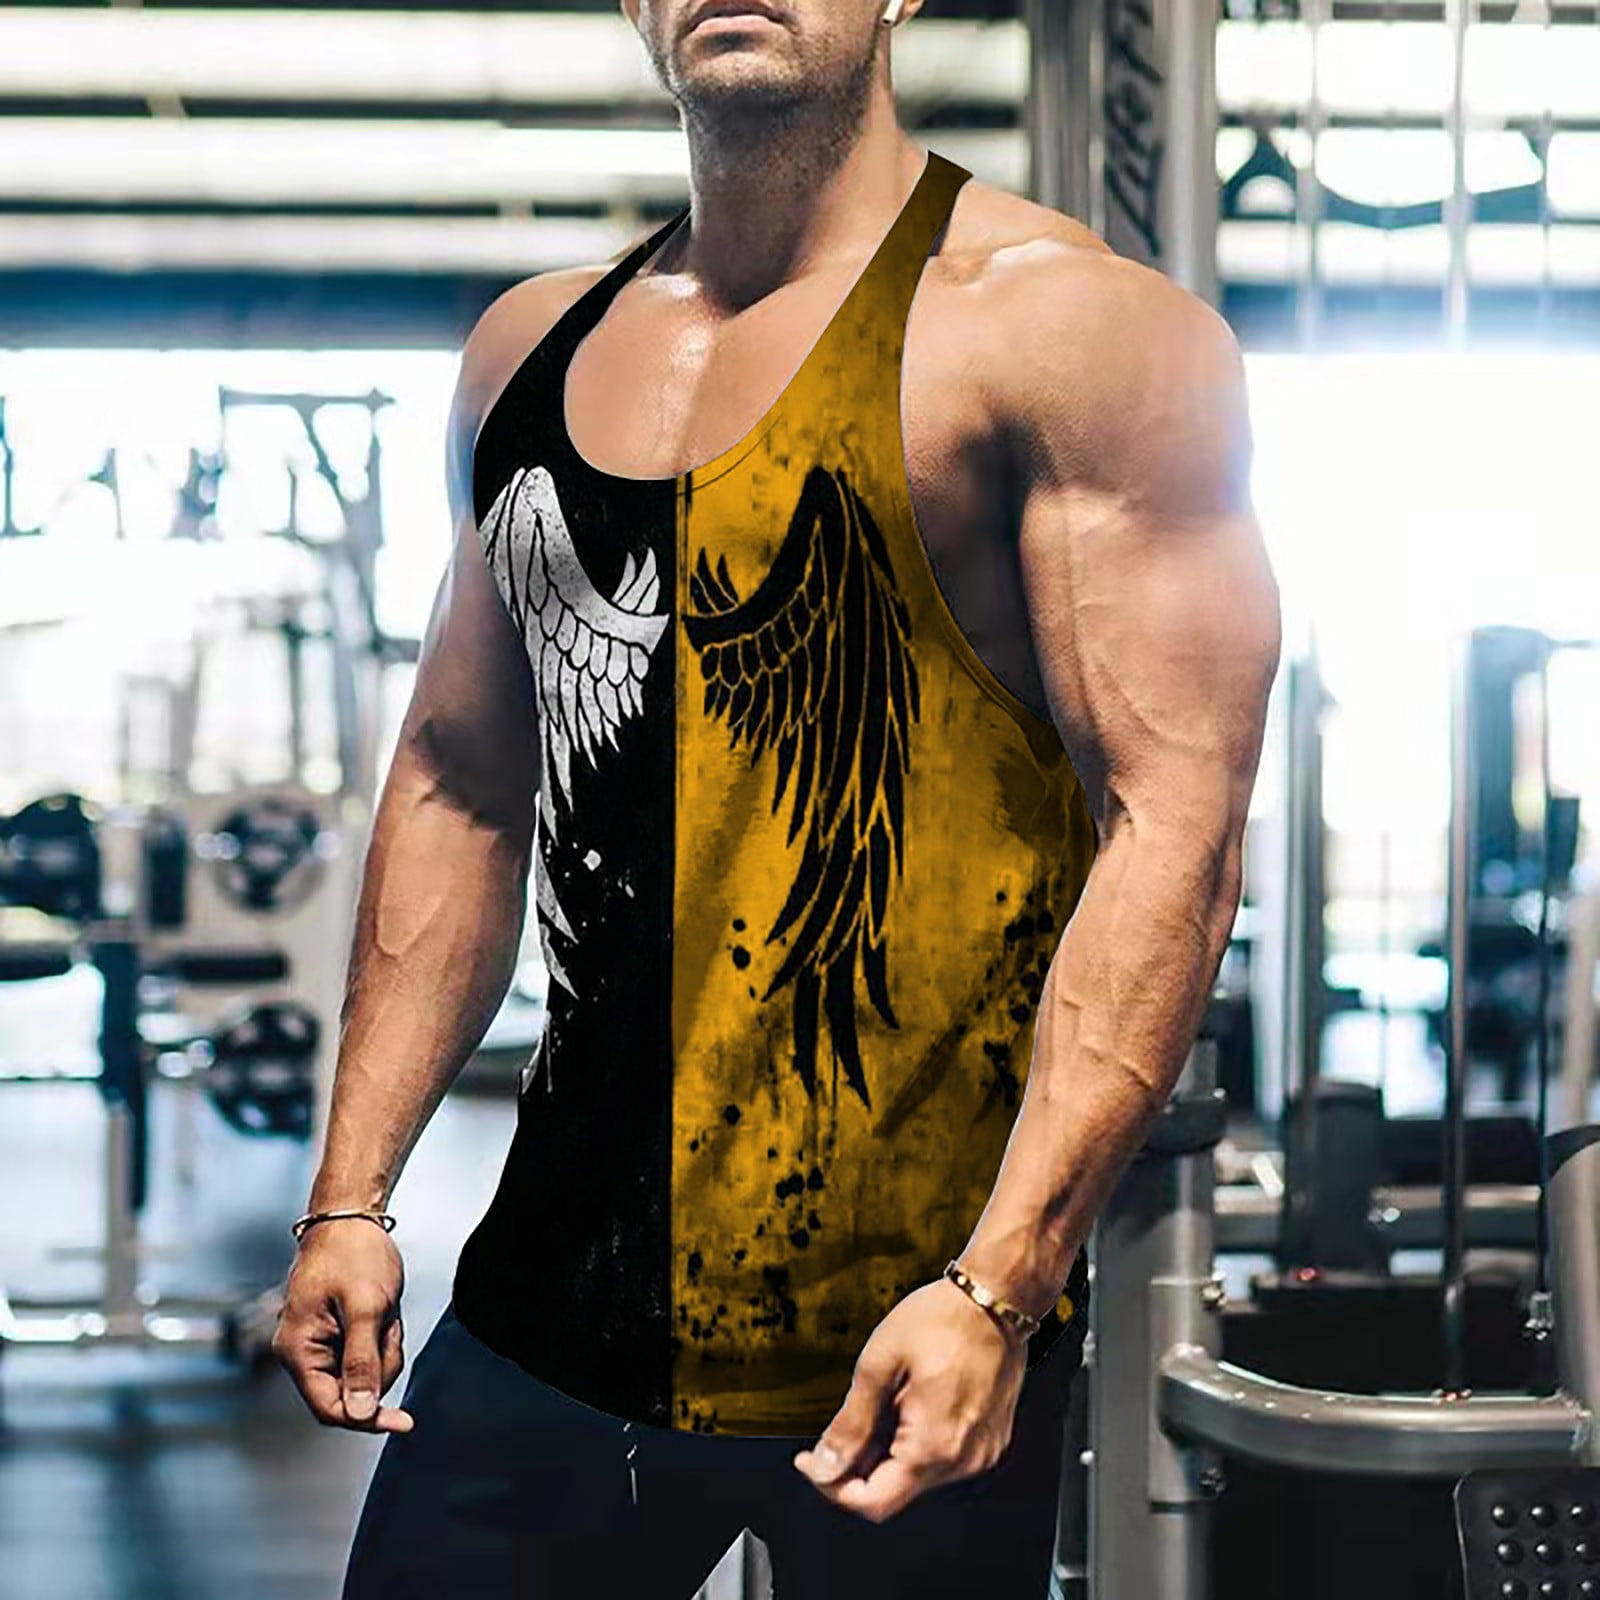 Men's Solid Tank Tops Slim Fit Crewneck Sleeveless Tshirt Lightweight  Athletic Muscle Tank Top Performance Training Tee